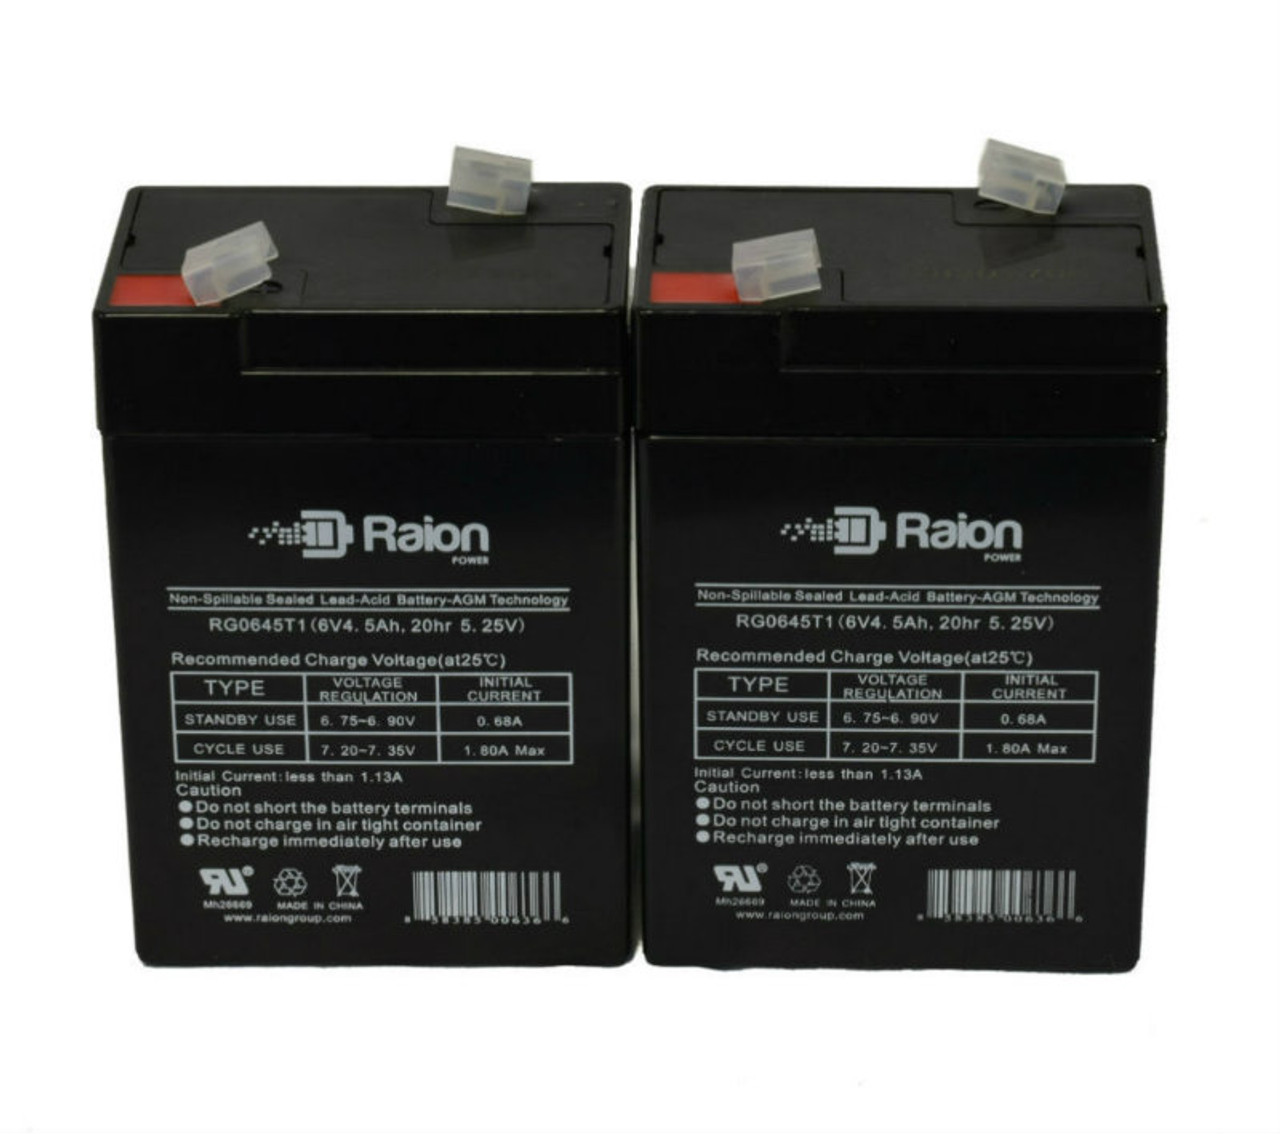 Raion Power 6V 4.5Ah Replacement Emergency Light Battery for Prescolite 12-706 - 2 Pack